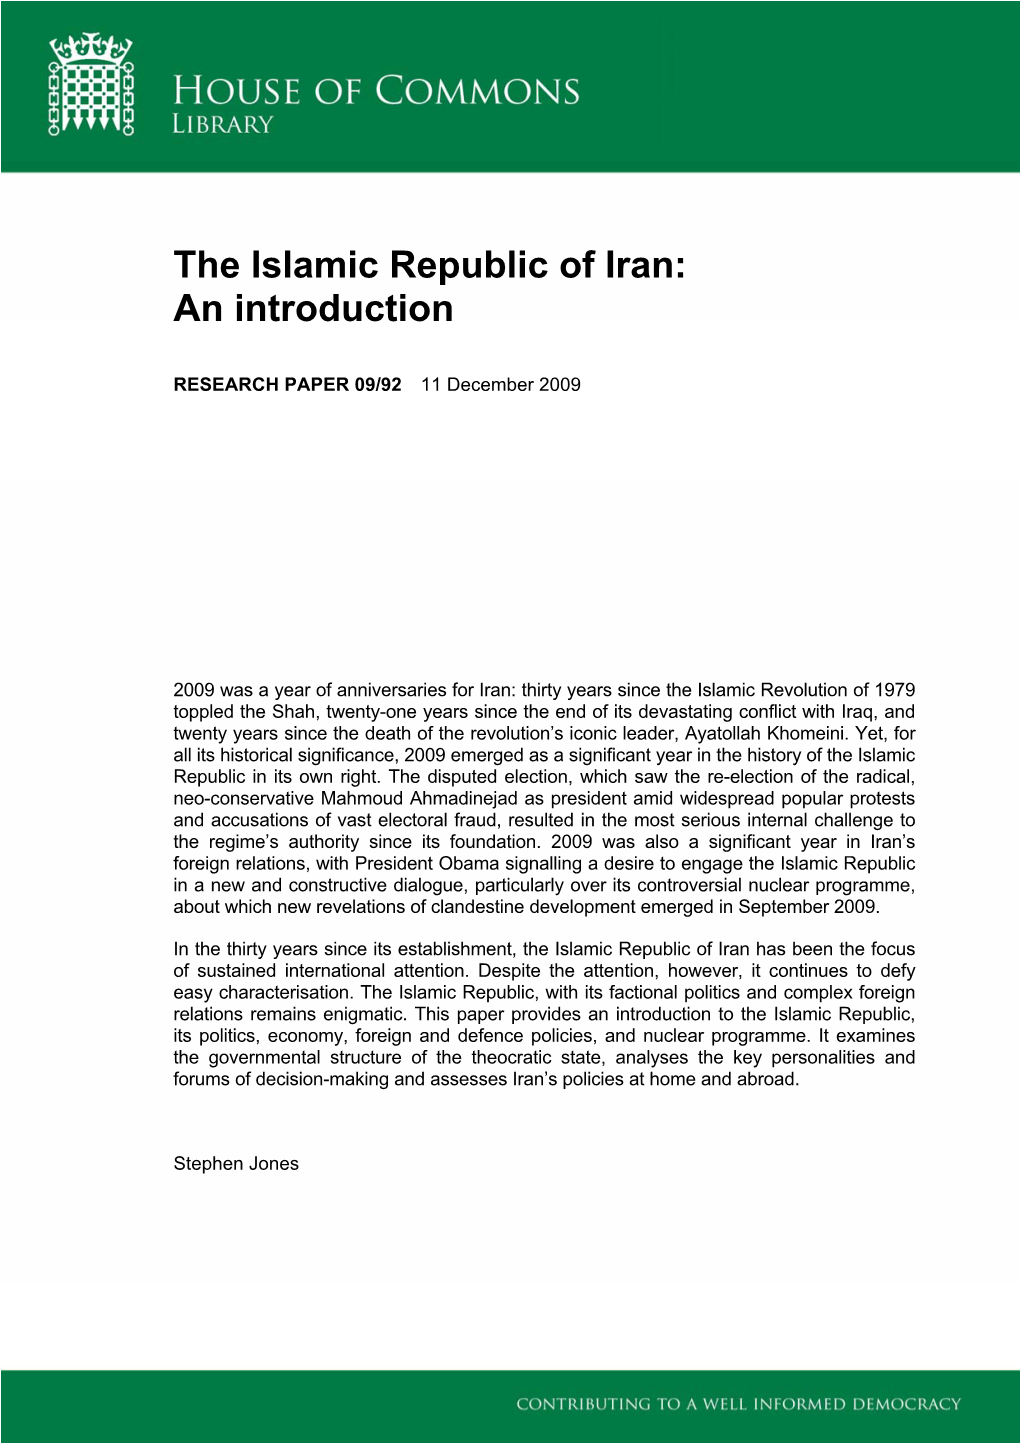 The Islamic Republic of Iran: an Introduction